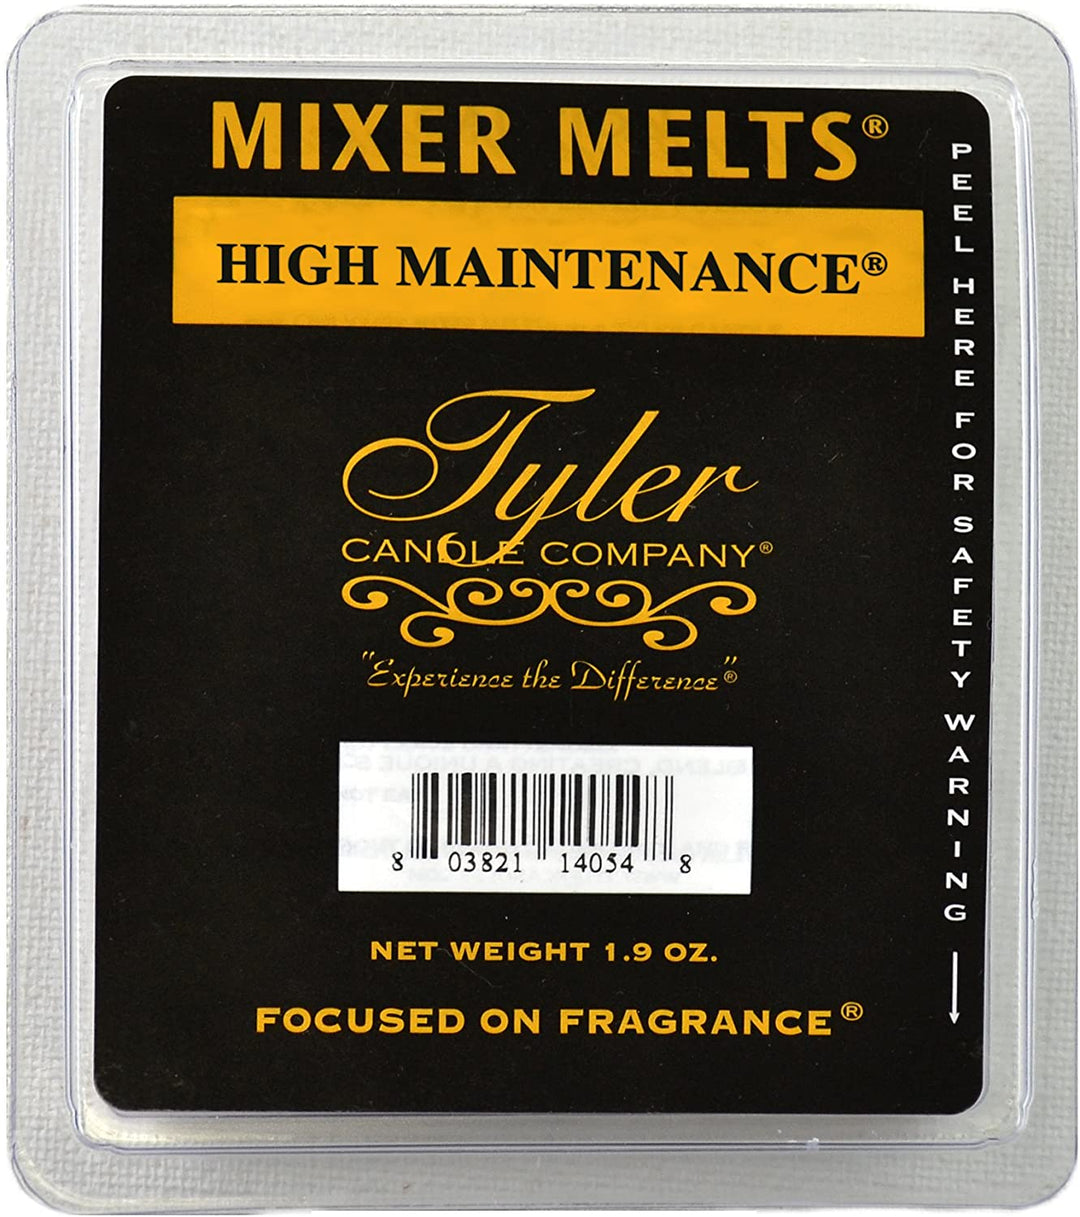 Tyler Candle Company - Mixer Melts - High Maintenance